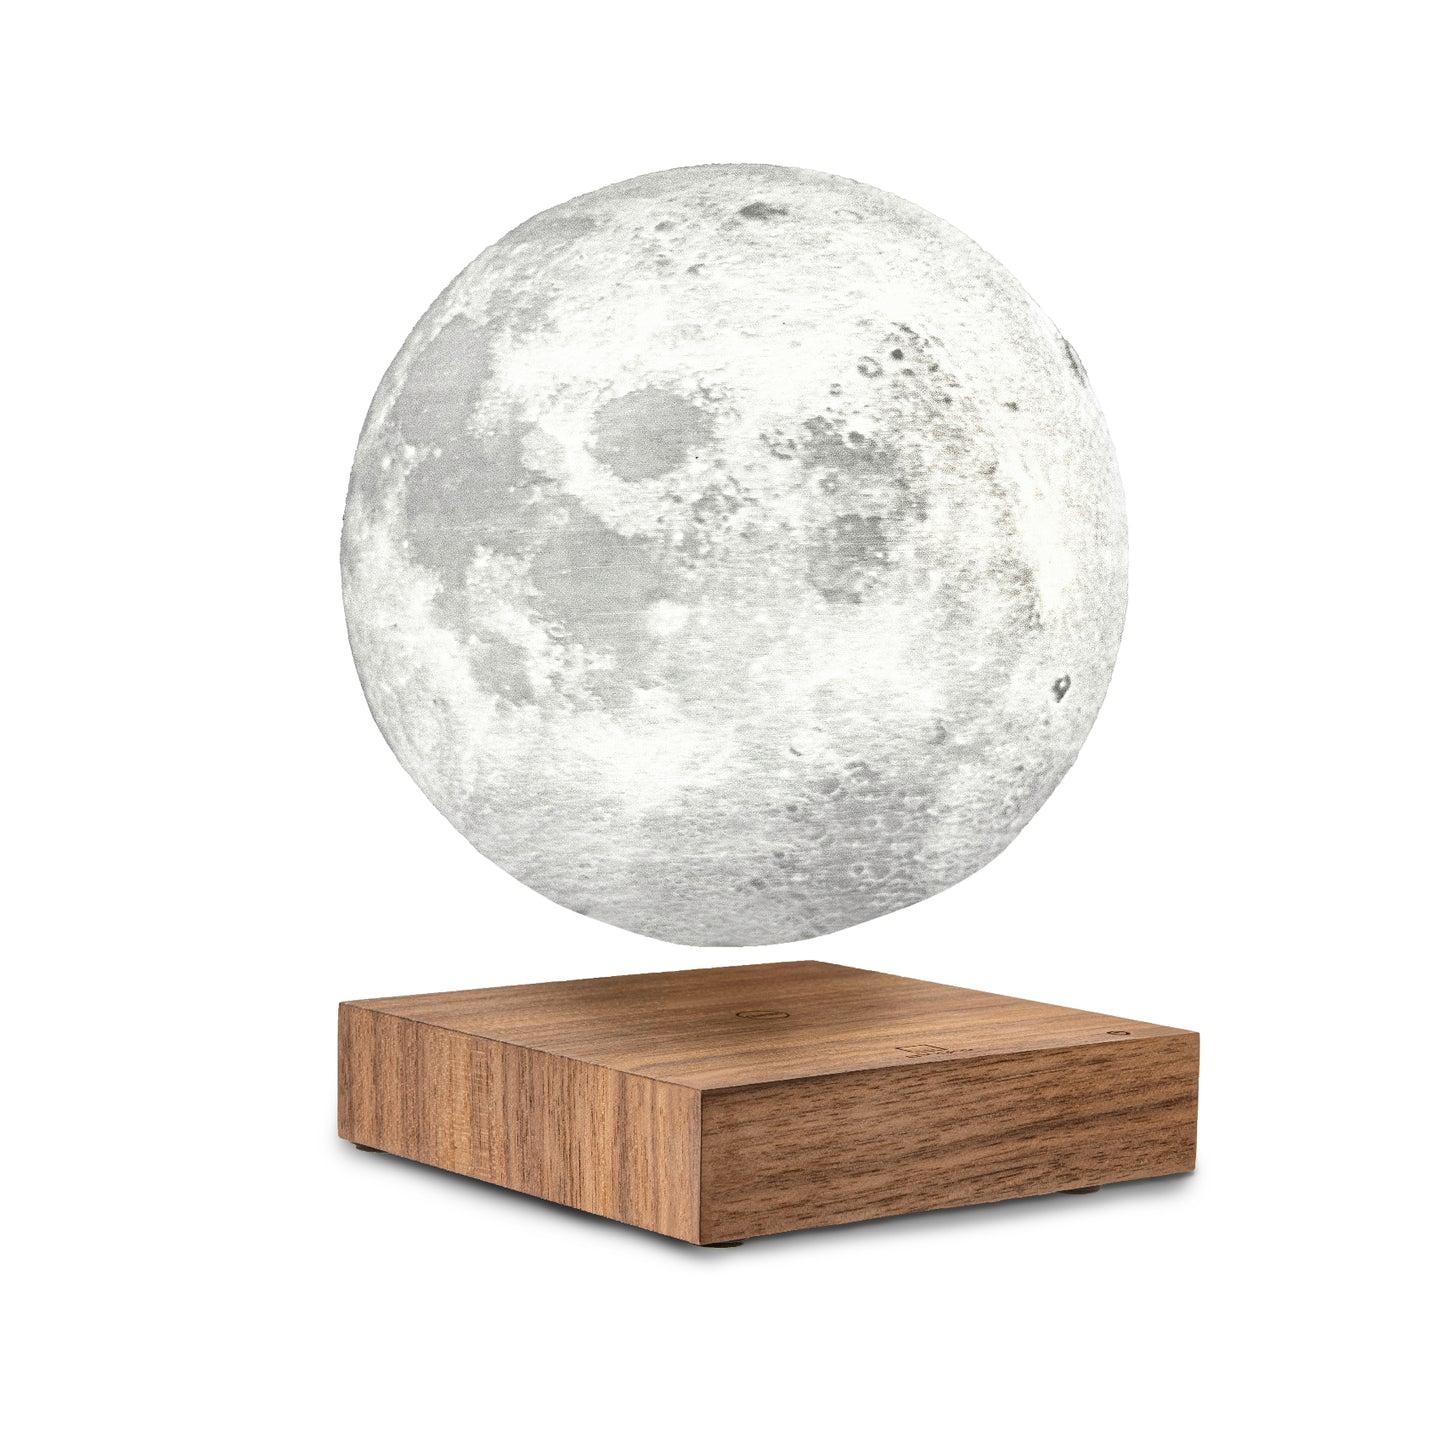 Gingko Moon Lamp on white background